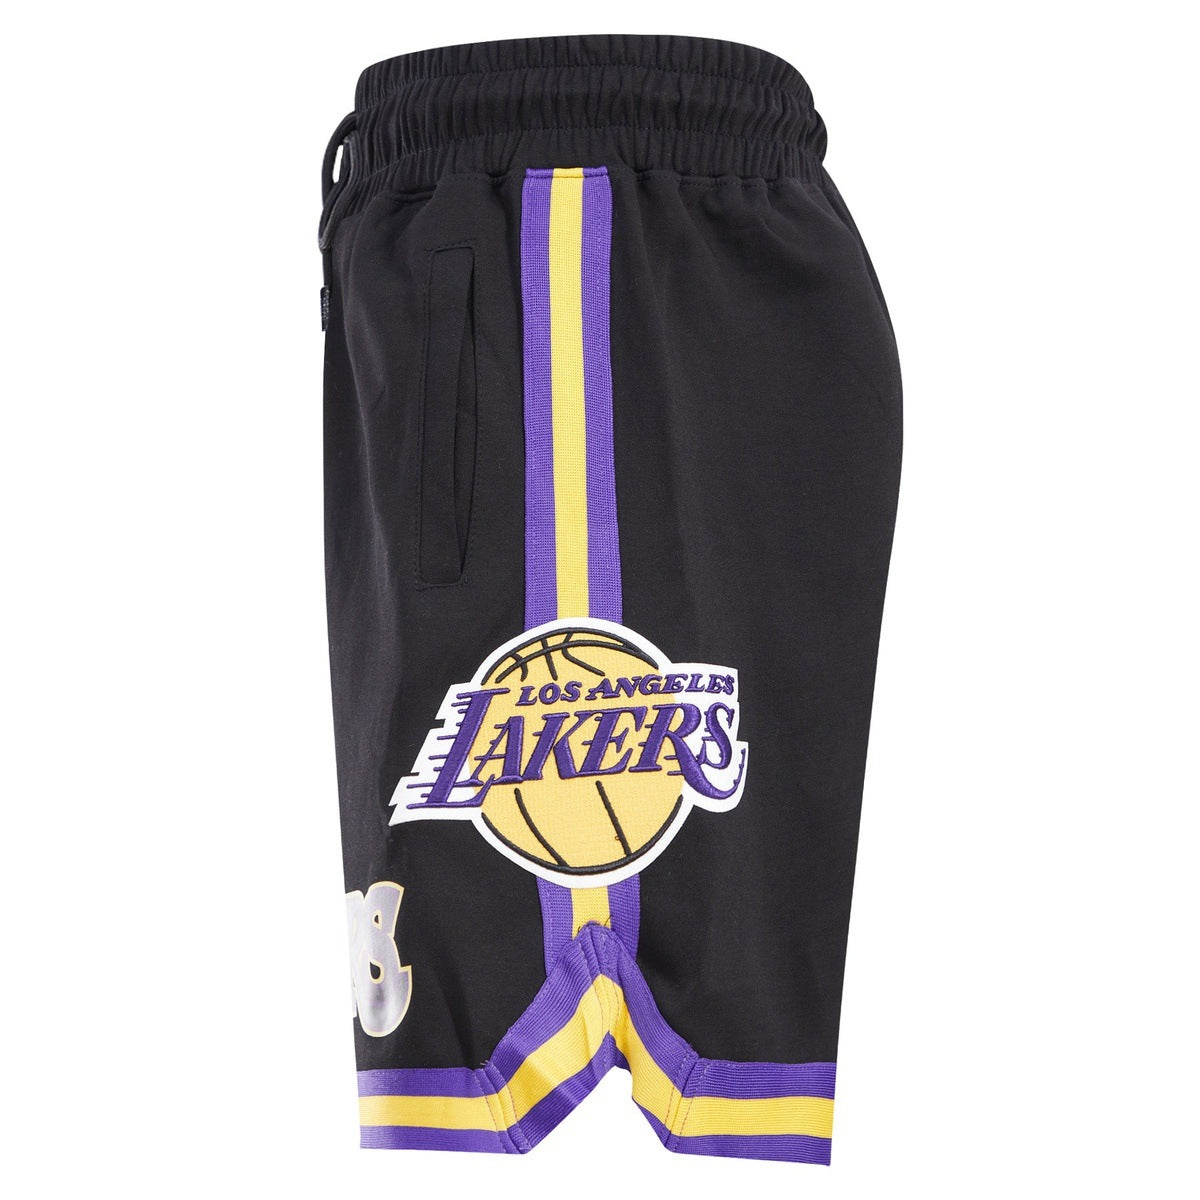 Los Angeles Lakers Black Pocket men's Basketball Shorts Size: S-XXL